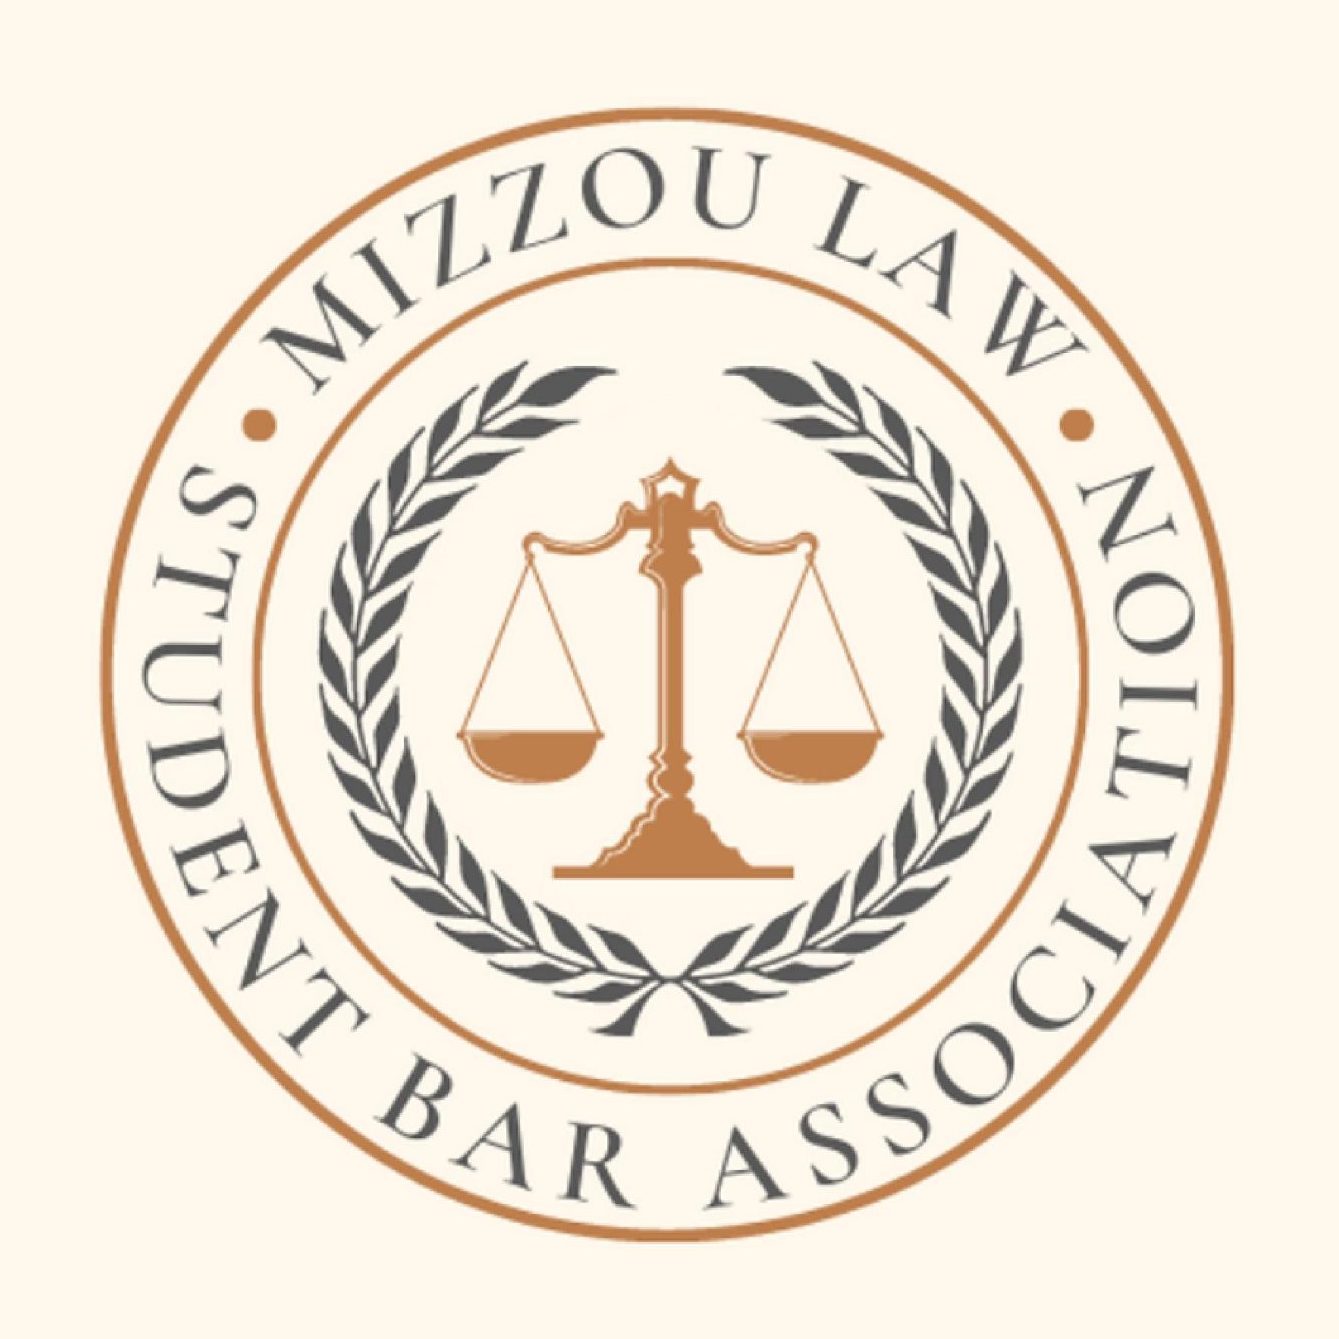 Student bar association logo